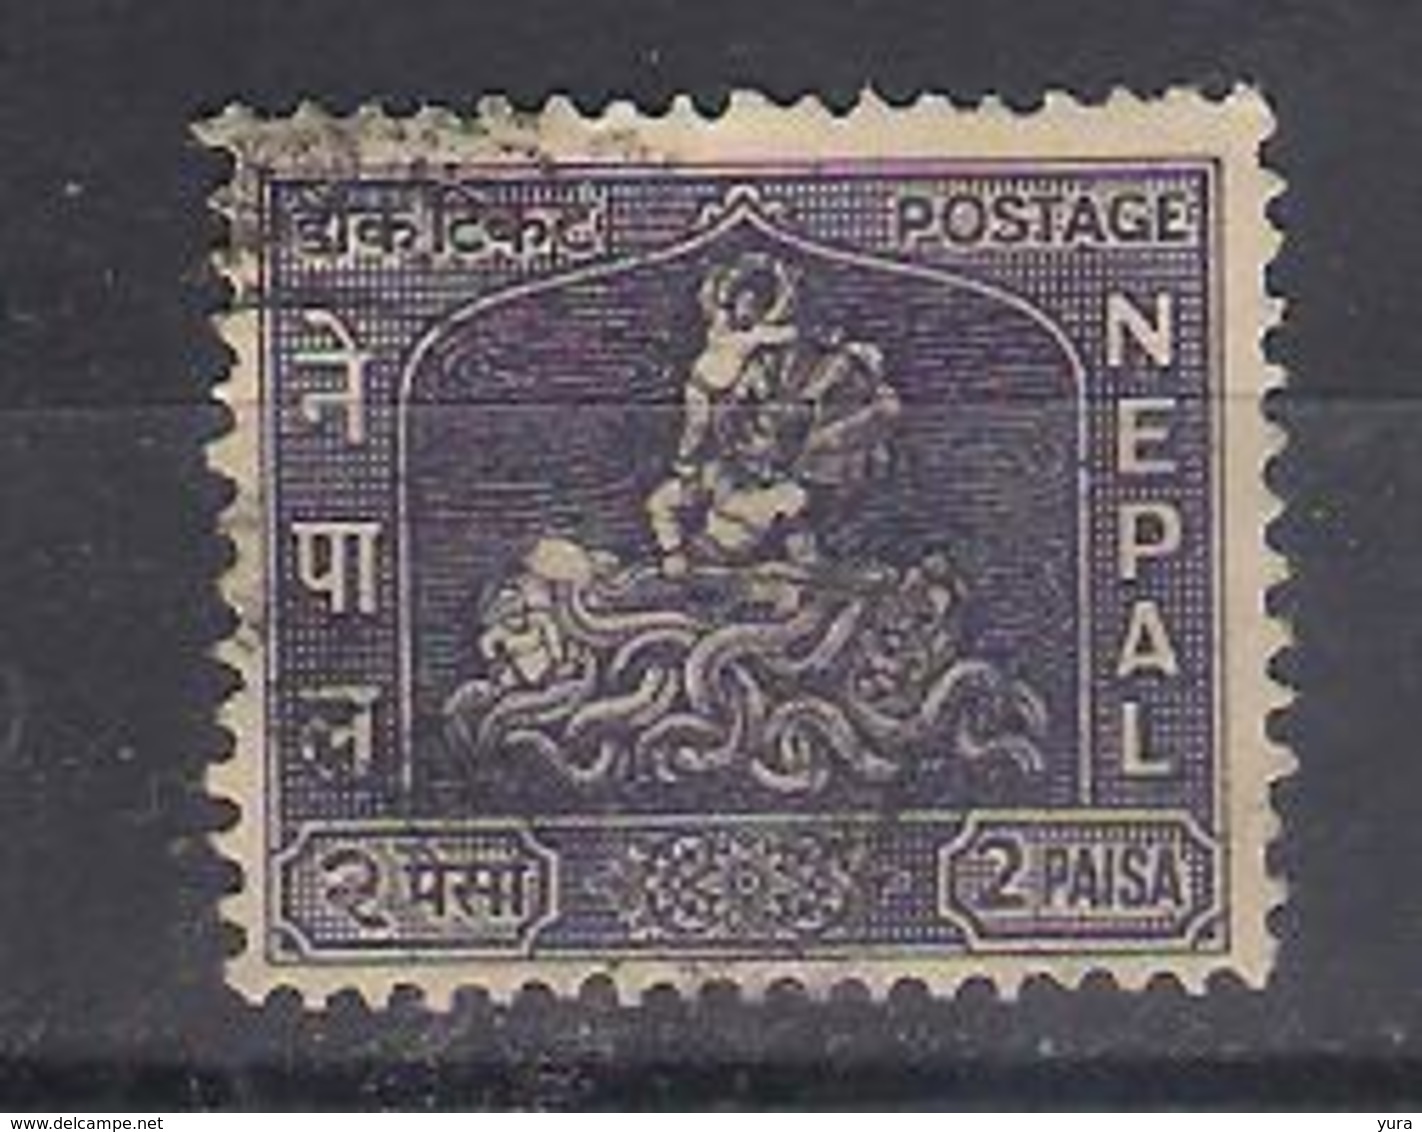 Nepal 1959 Mi Nr 116 God Krishna     (a2p13) - Hindouisme